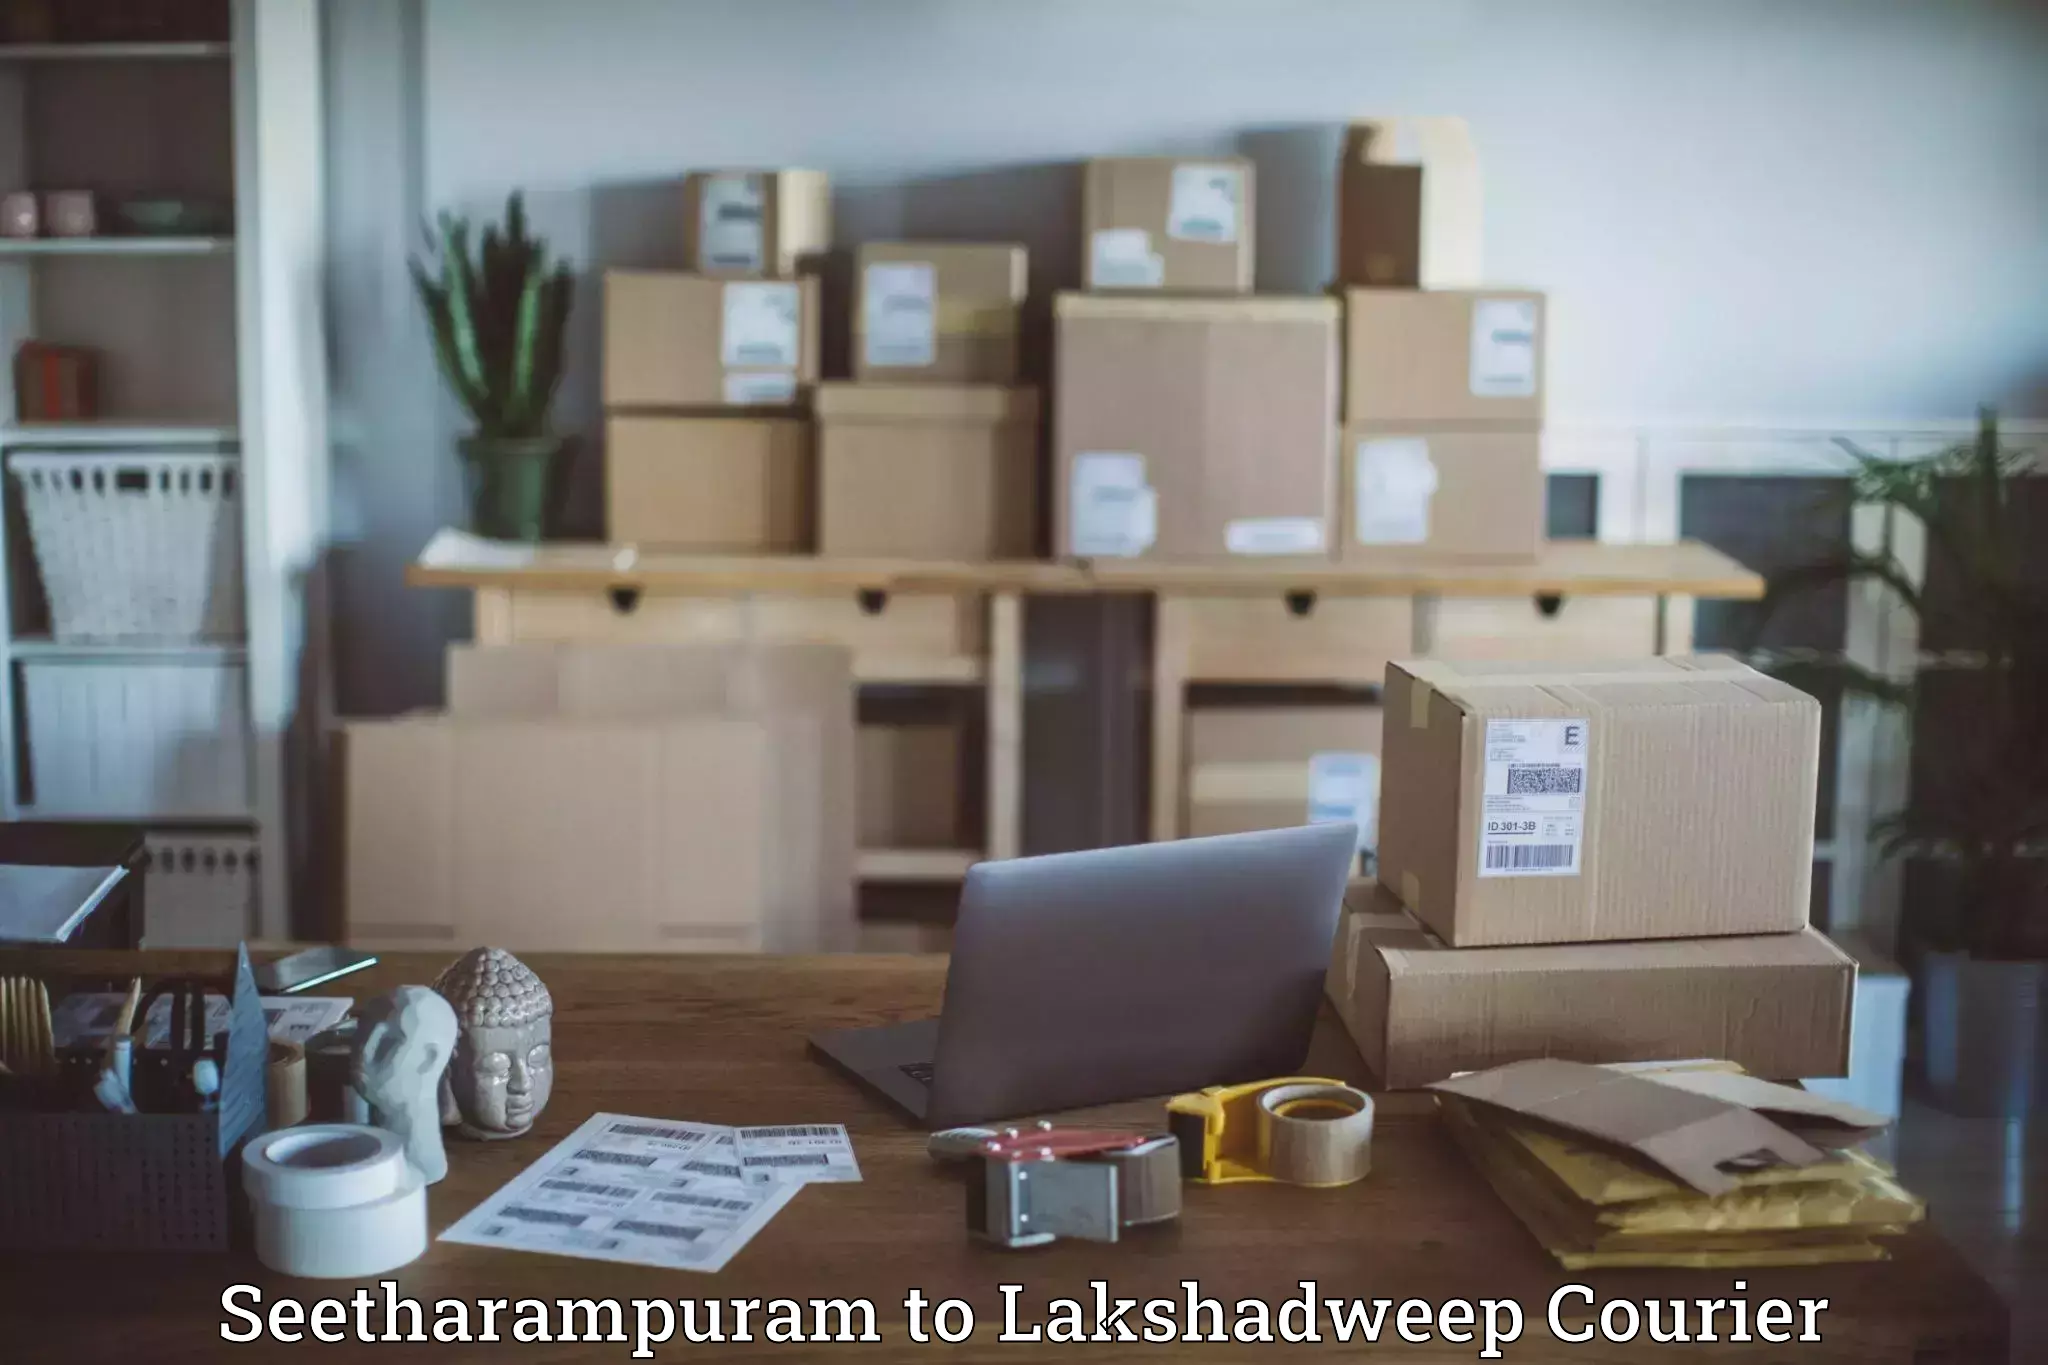 Express delivery network Seetharampuram to Lakshadweep